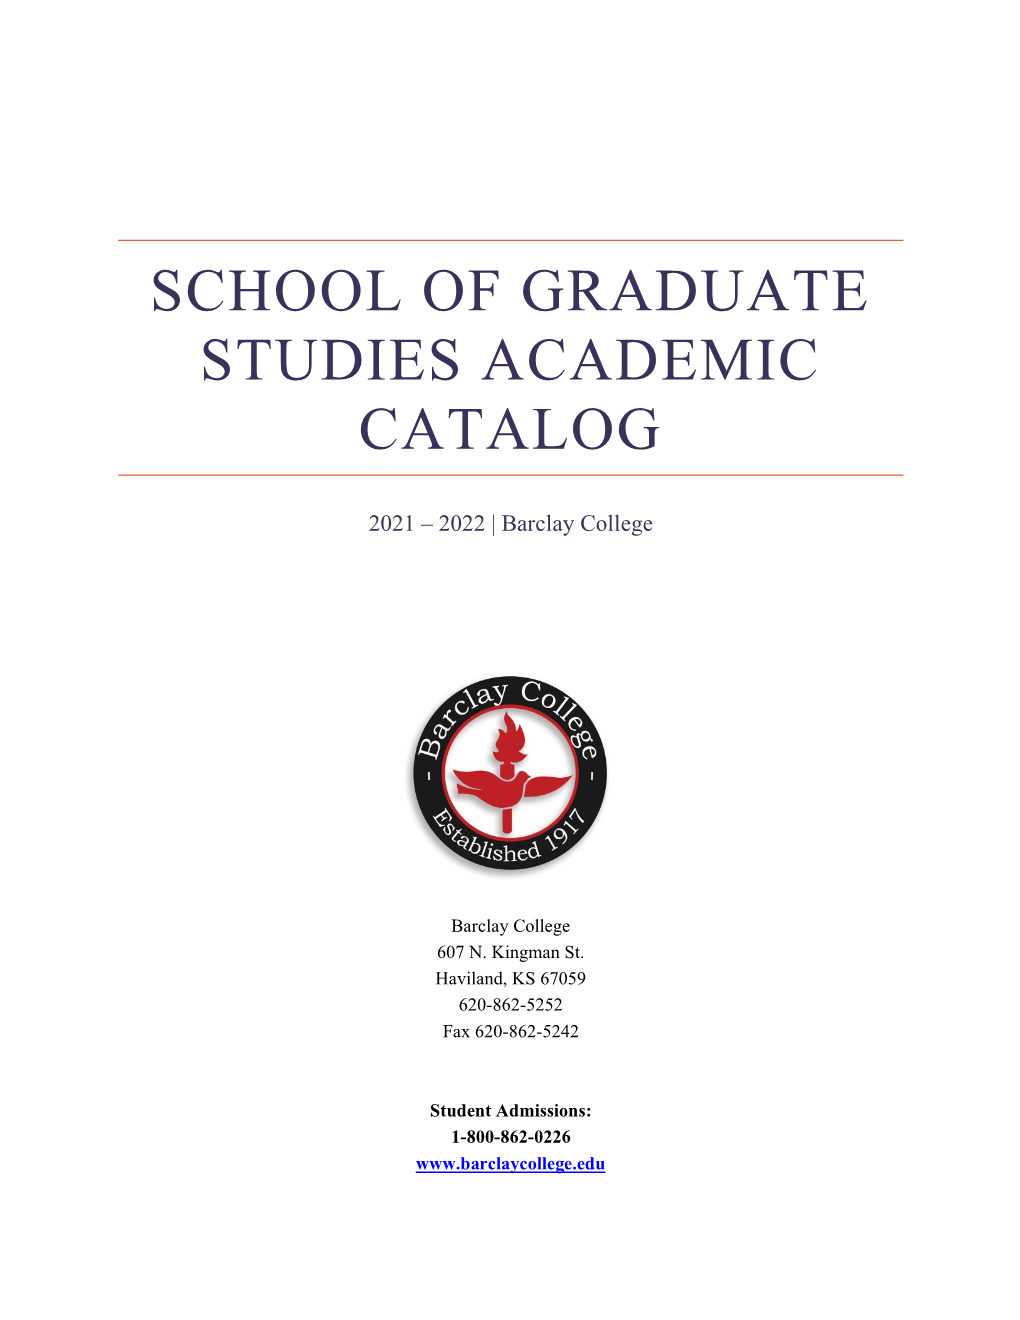 School of Graduate Studies Academic Catalog